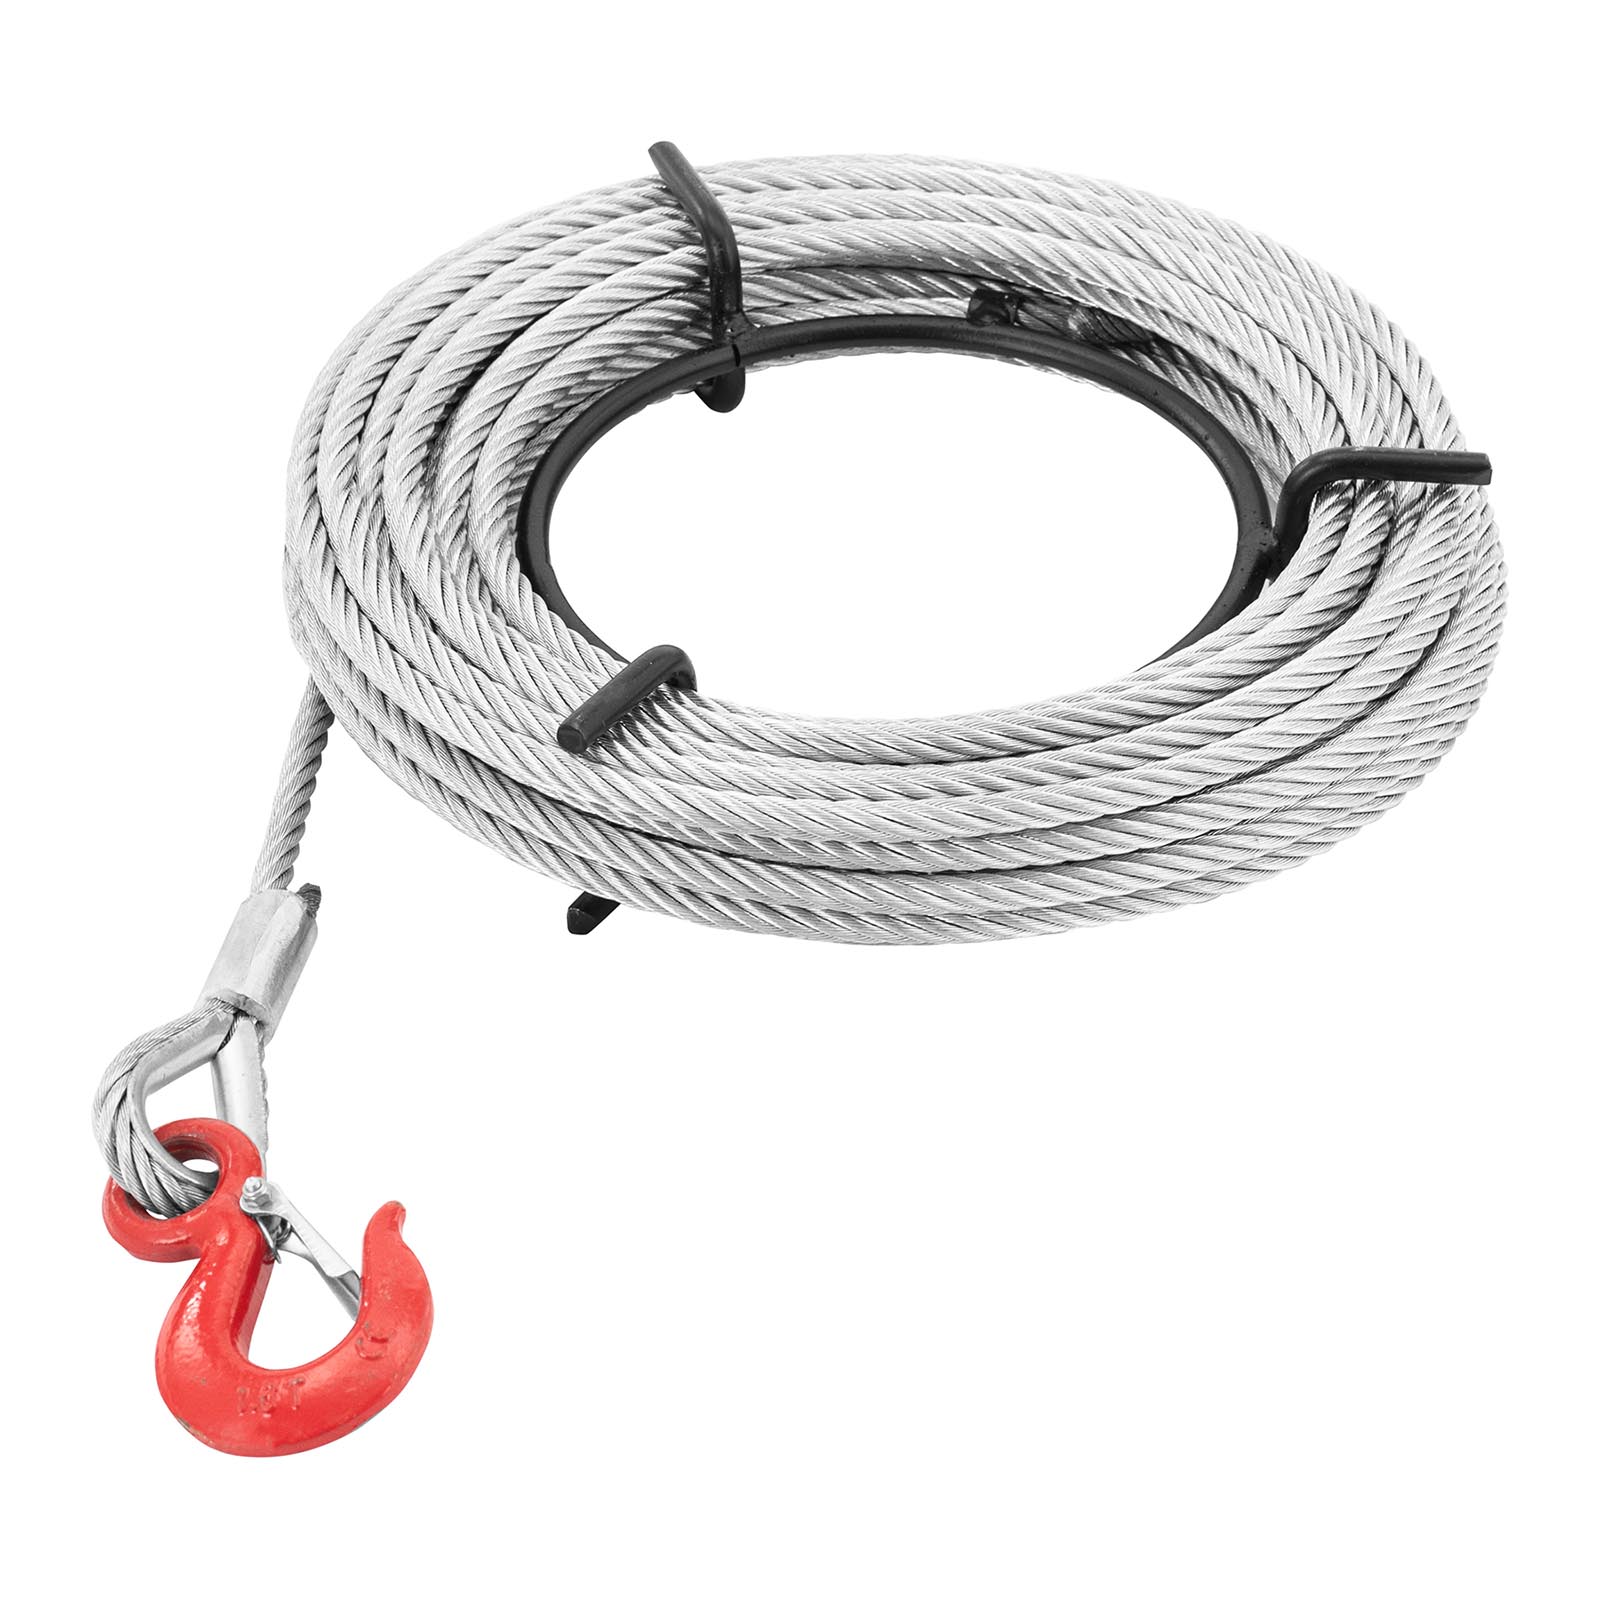 Multifunctionele takel - 1600 kg - 20 m kabel